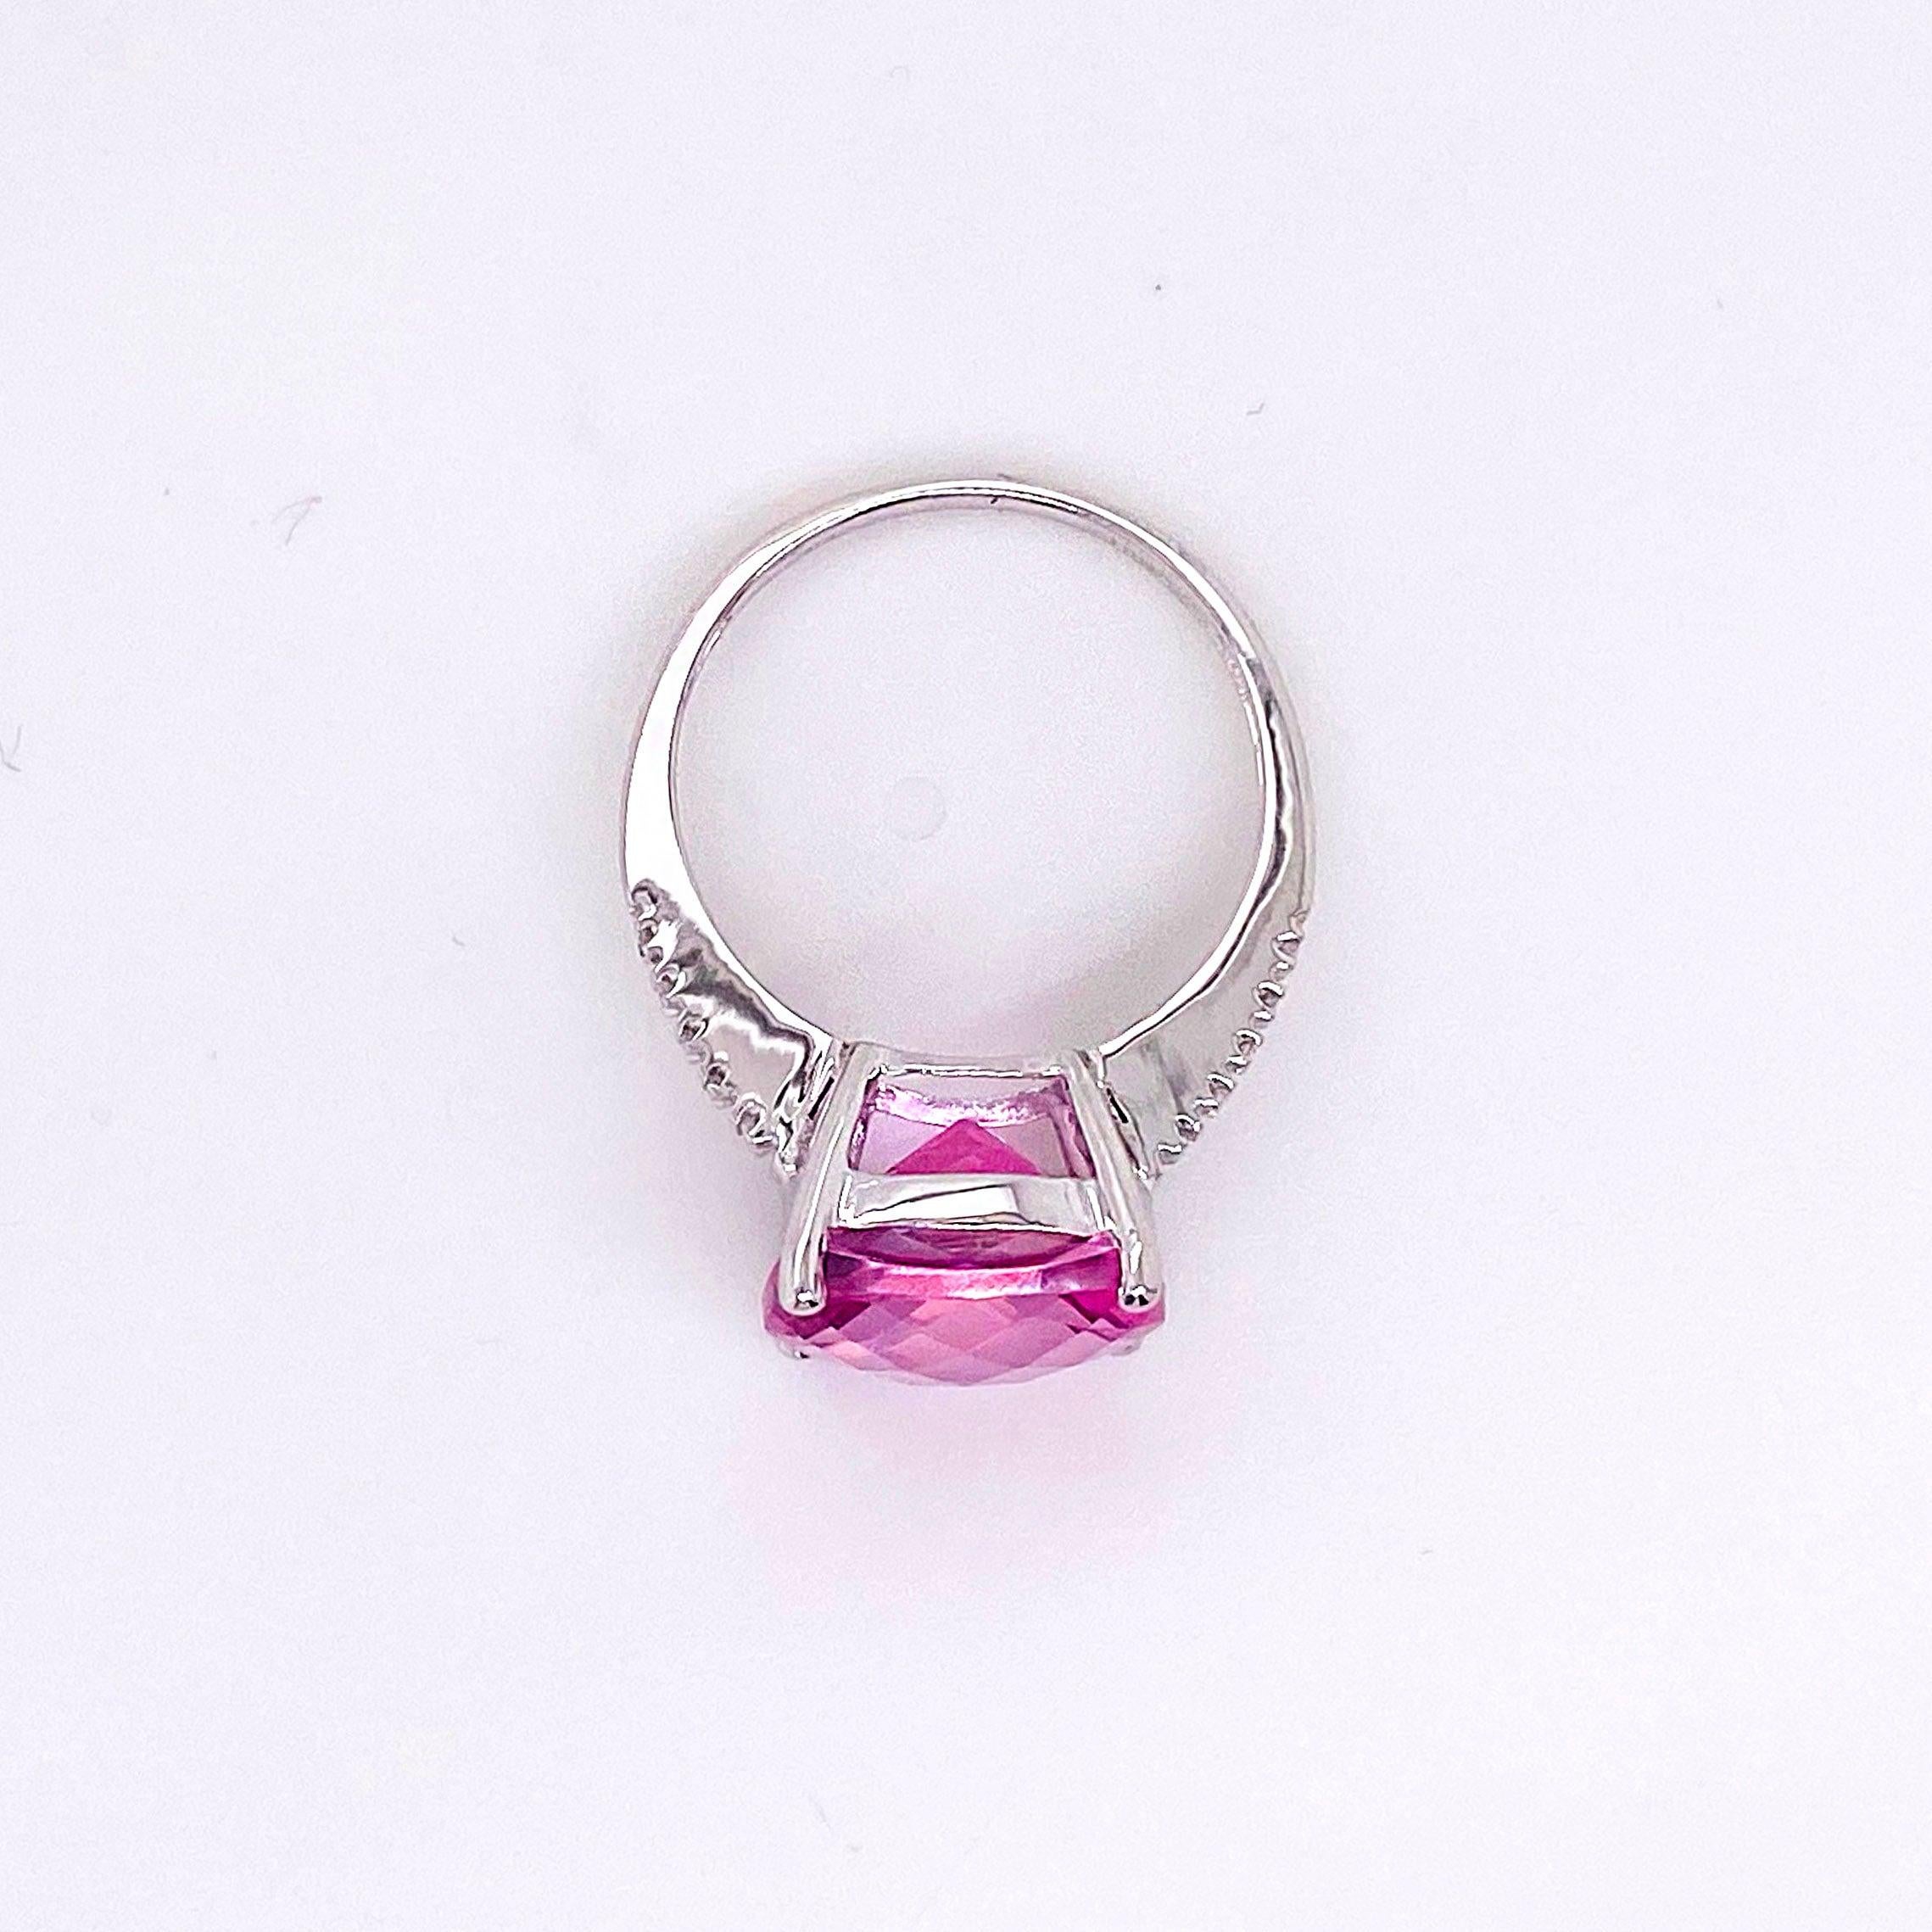 For Sale:  8 Carat Pink Topaz and Diamond Ring 14 Karat White Gold Cushion Cut Pink Topaz 5